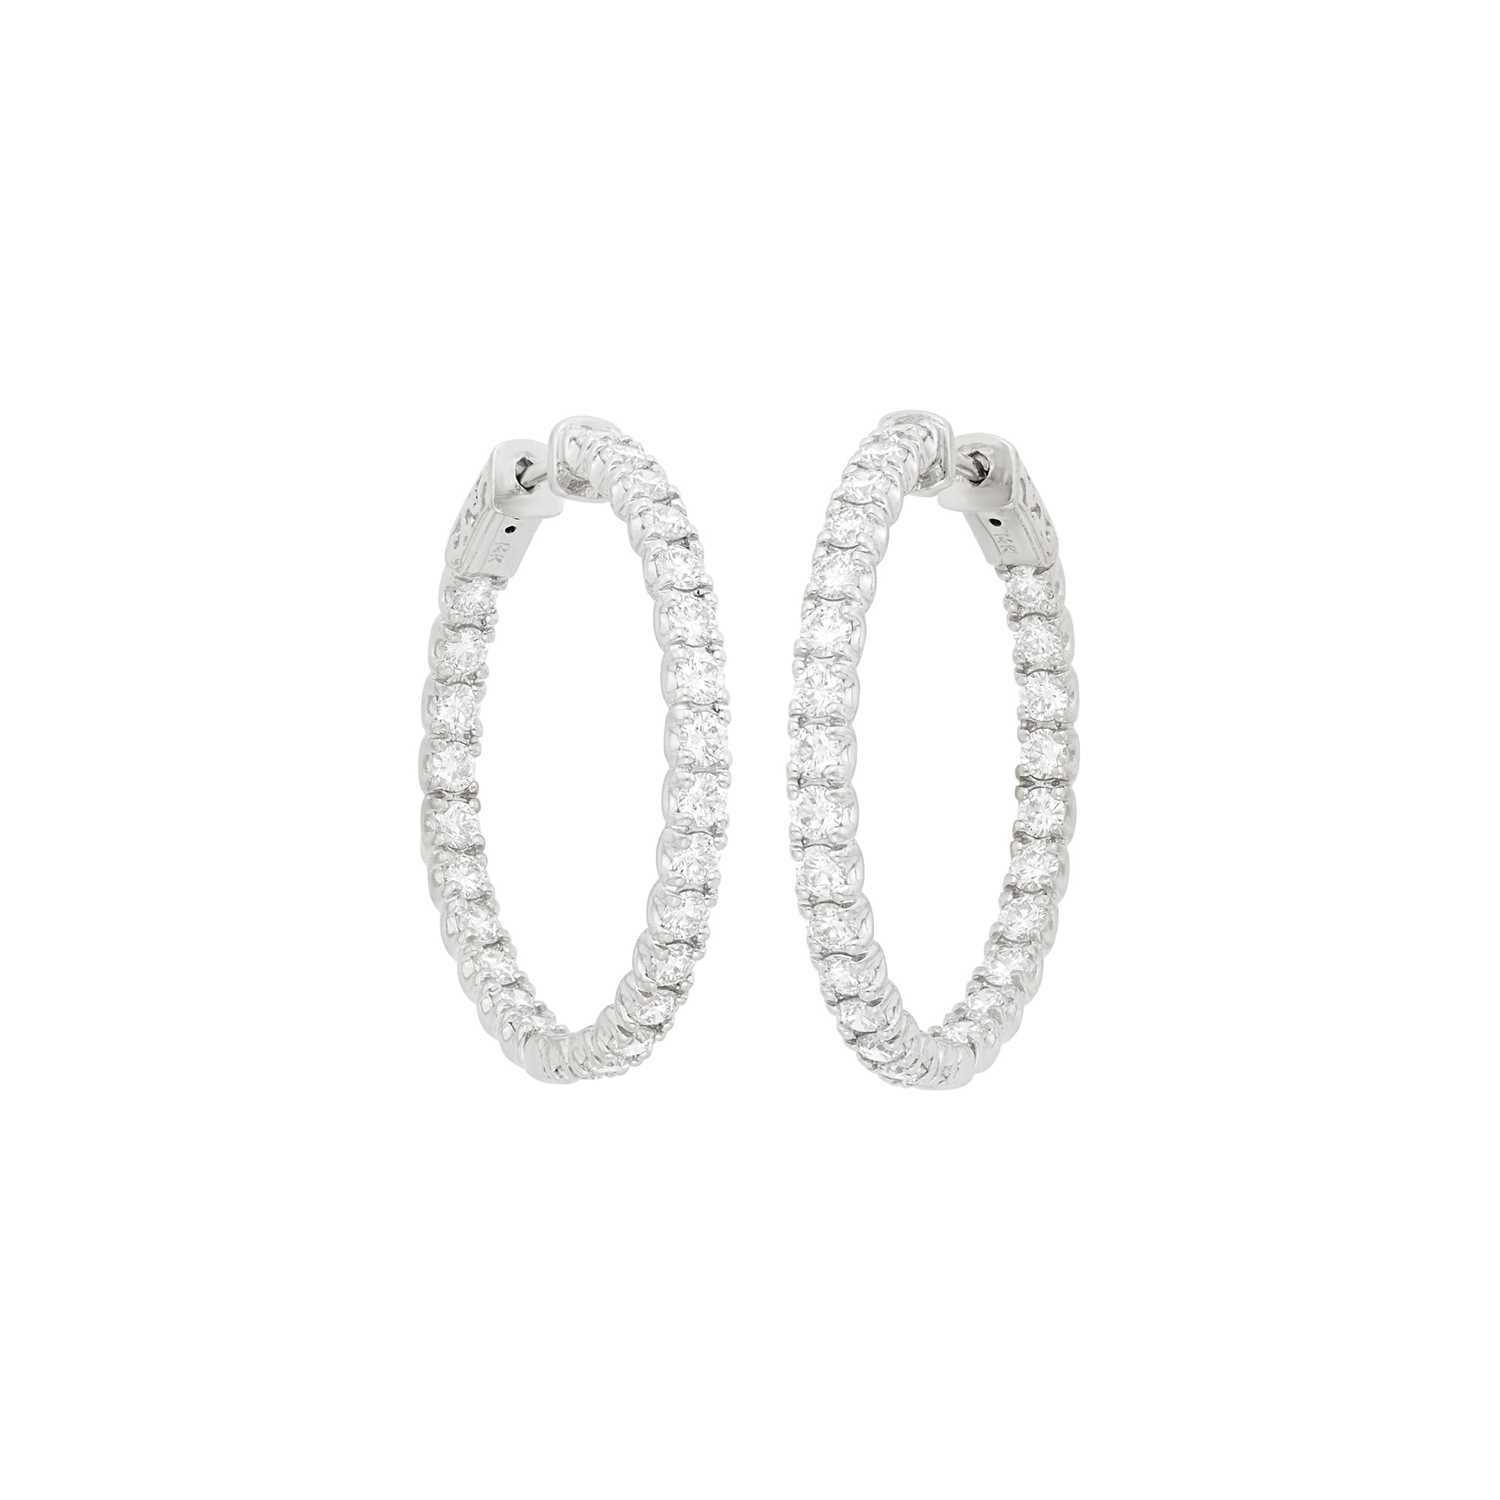 Lot 67 - Pair of White Gold and Diamond Hoop Earrings